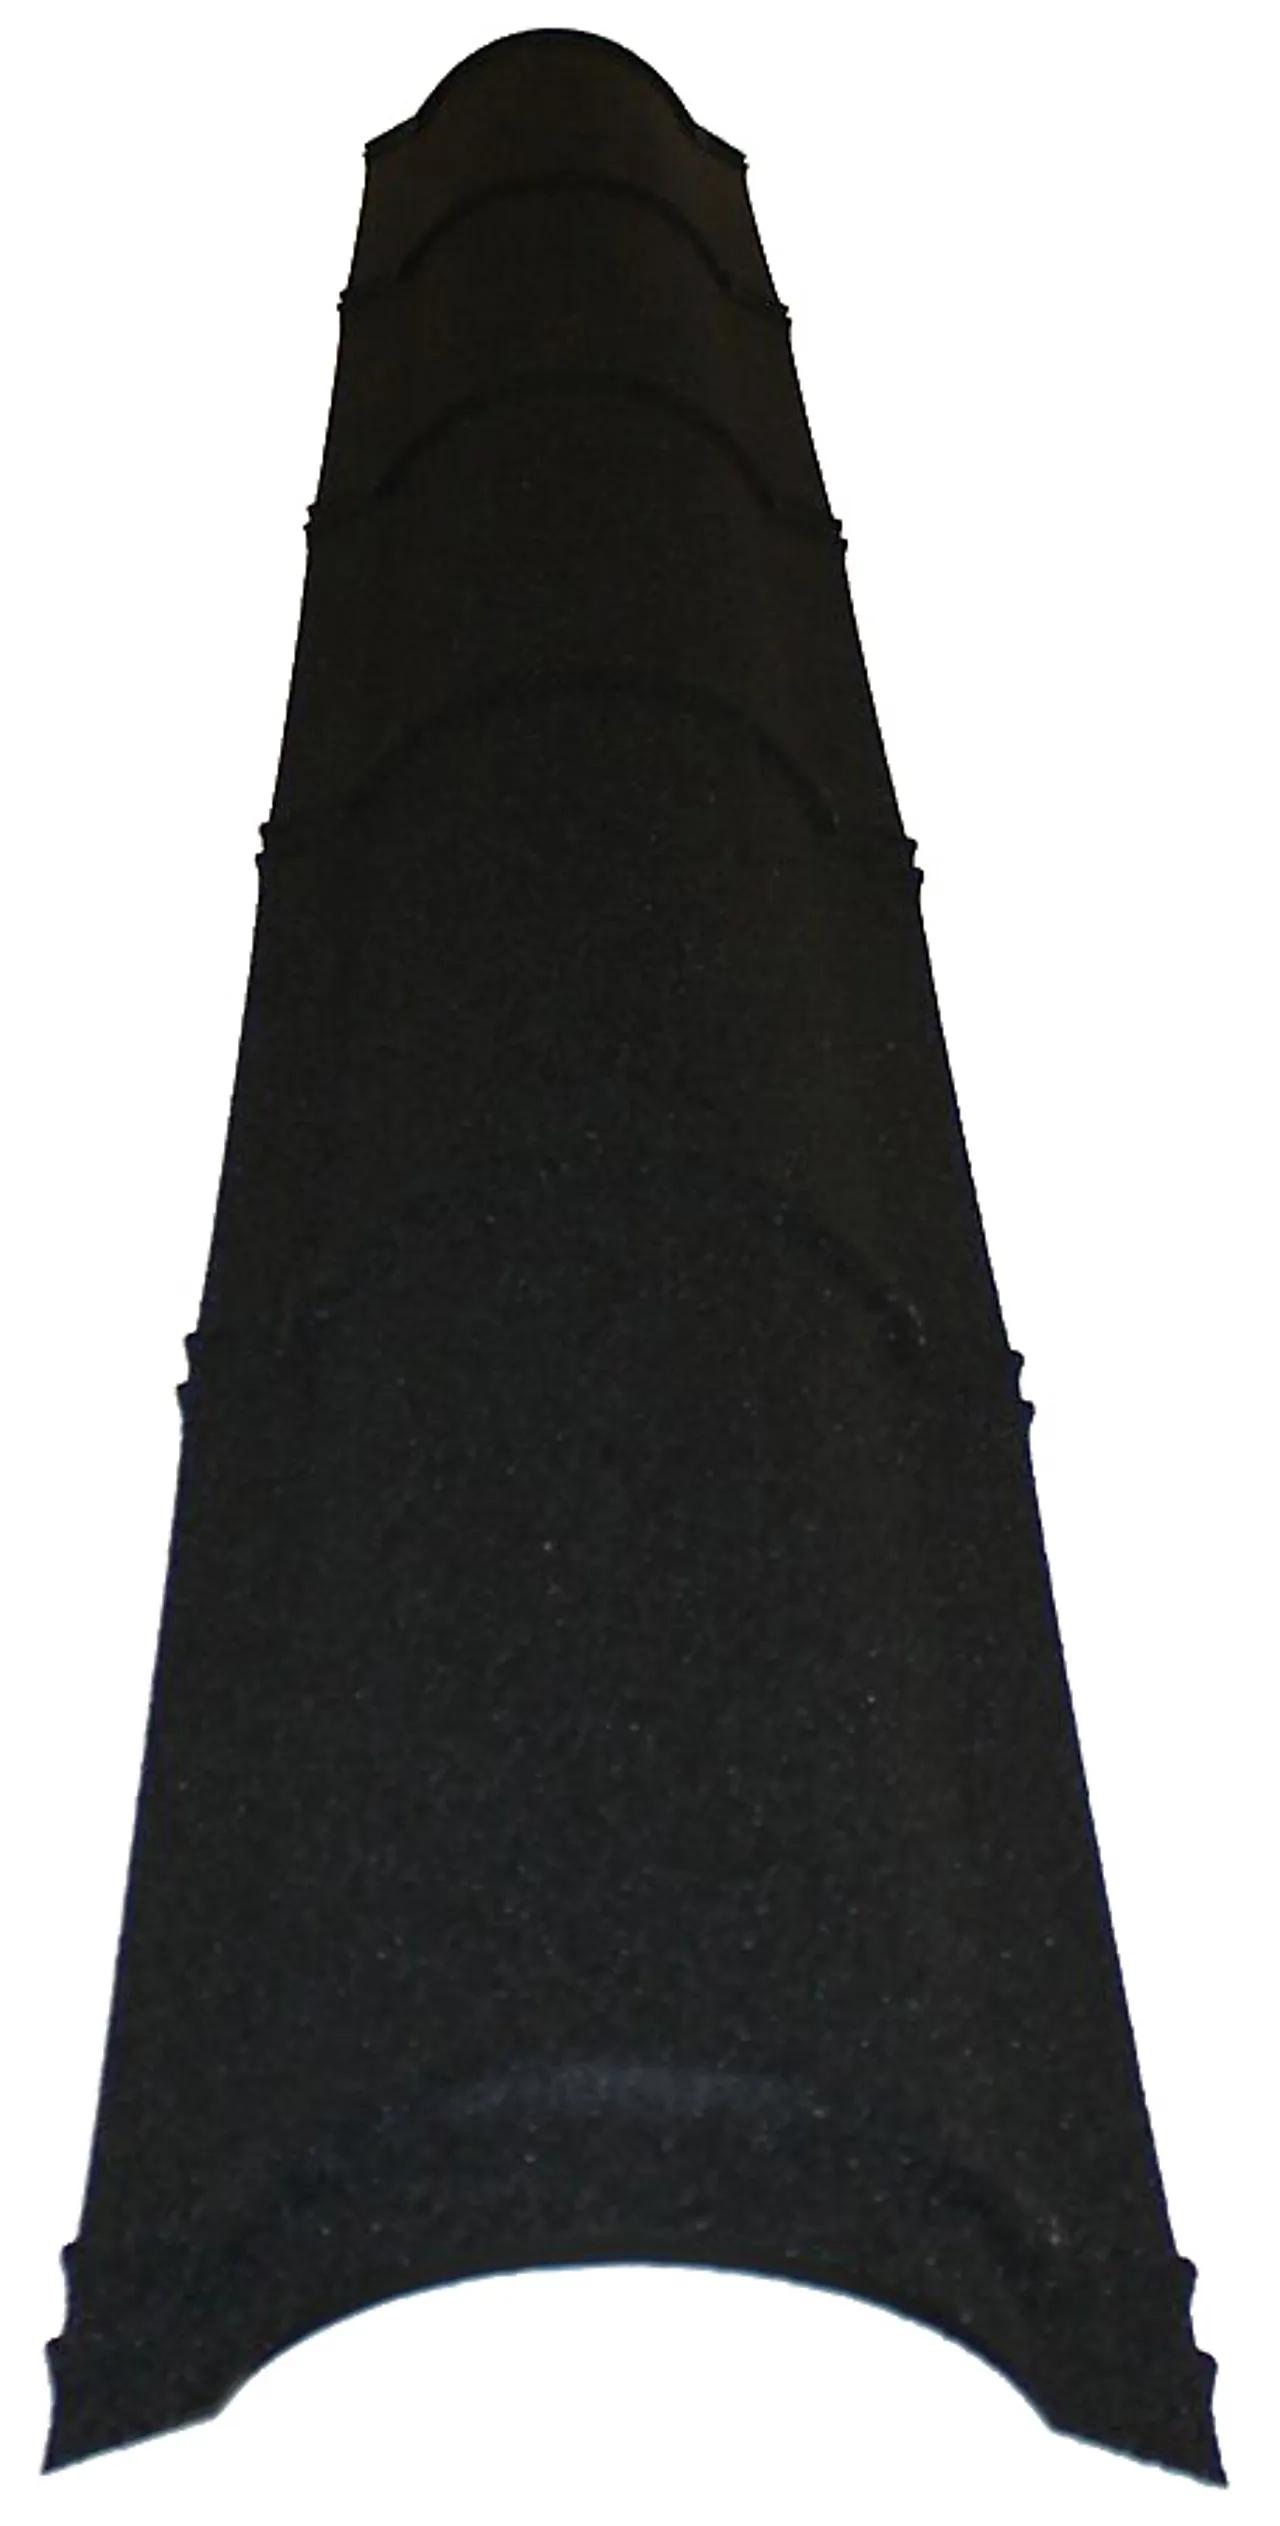 Møne takplate 2 meter svart null - null - 2 - Miniatyr